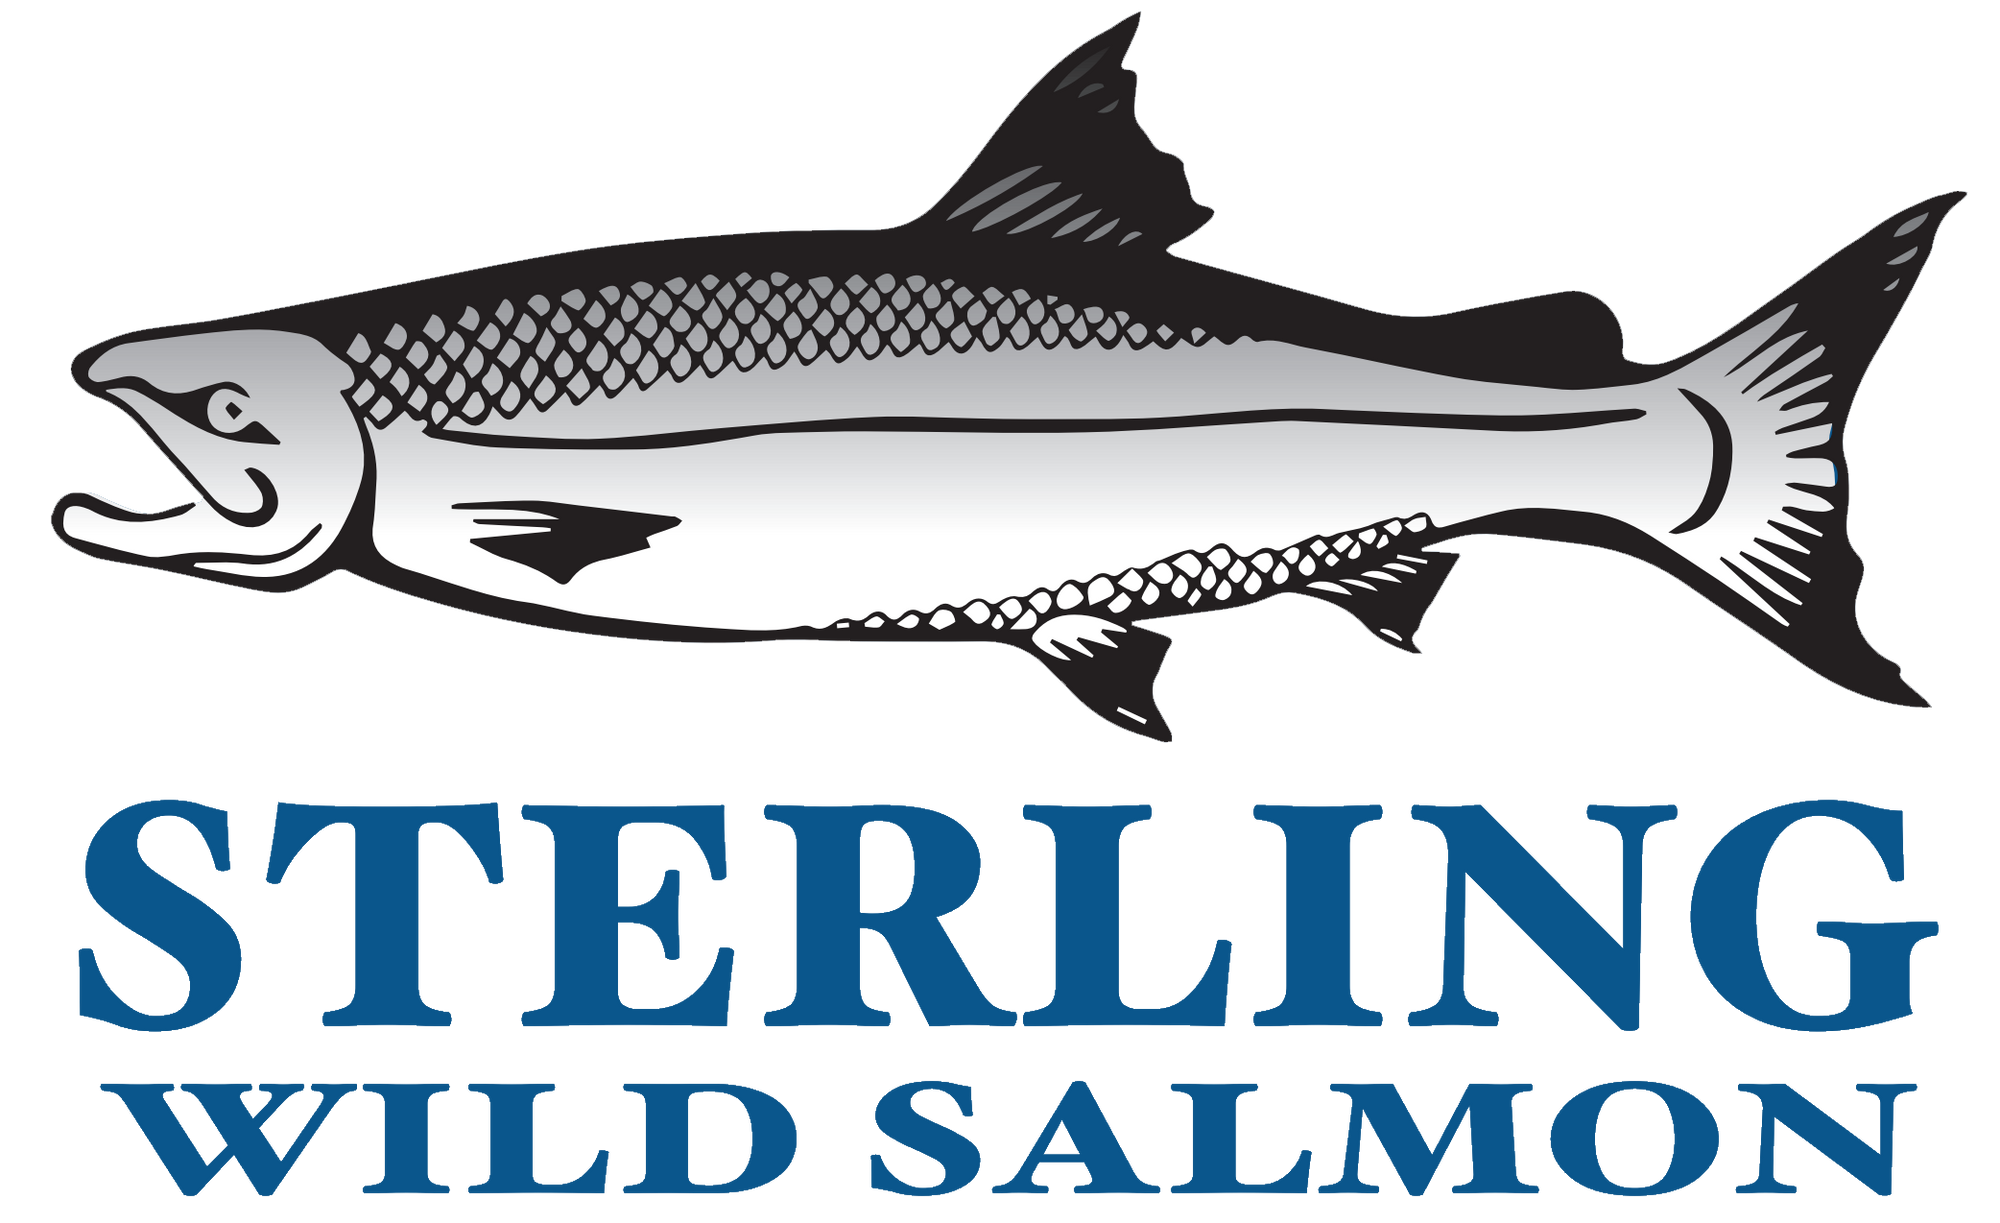 Sterling Wild Salmon